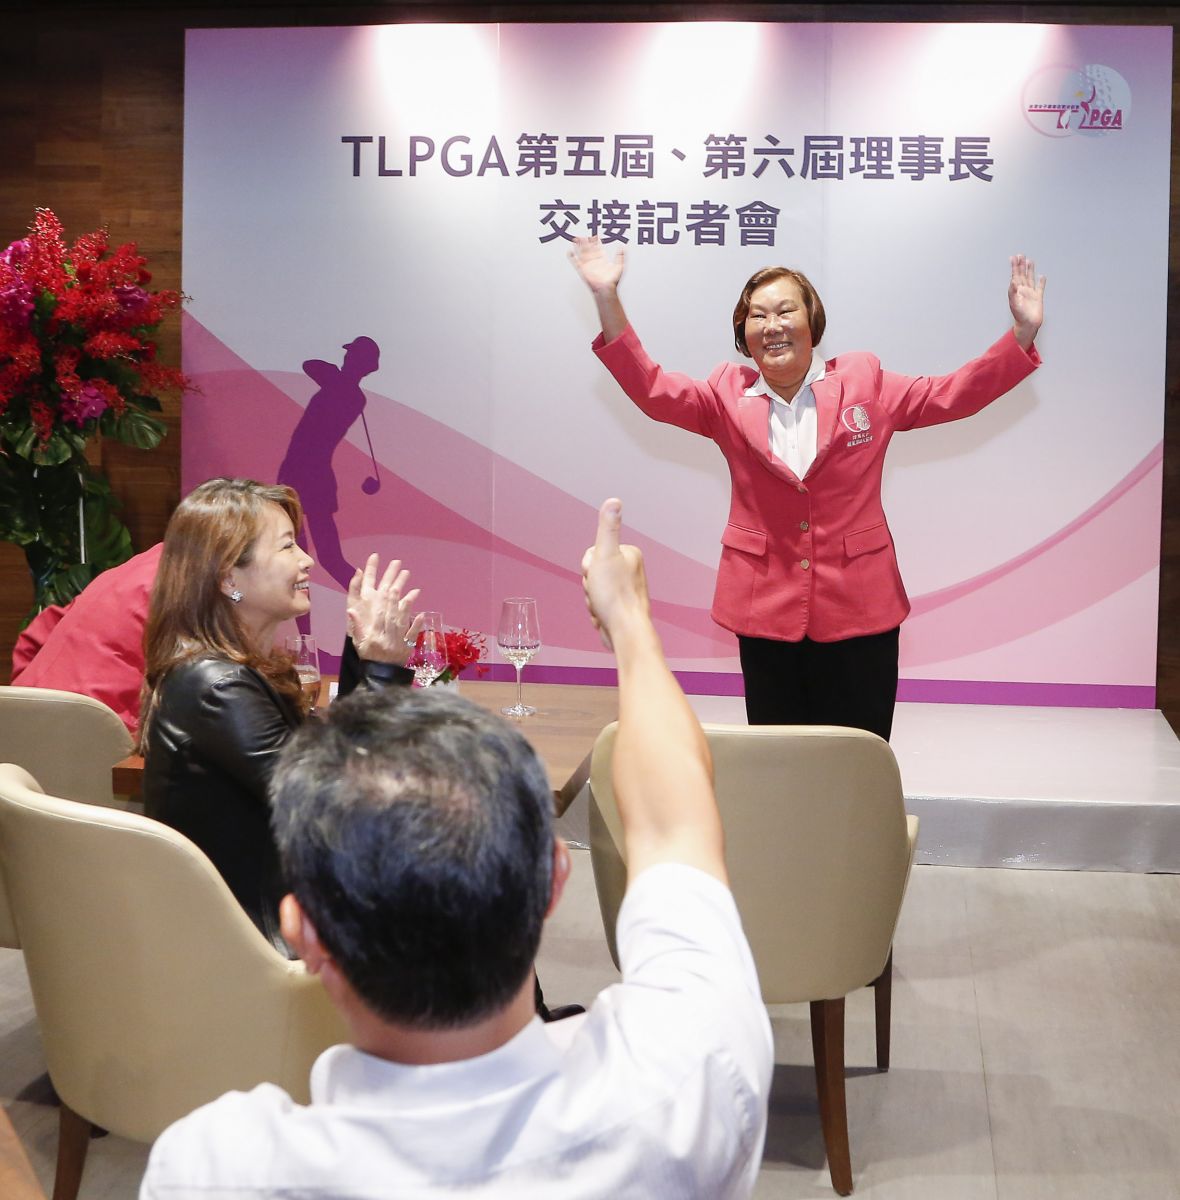 TLPGA第五屆理事長劉依貞向支持者揮手致意。